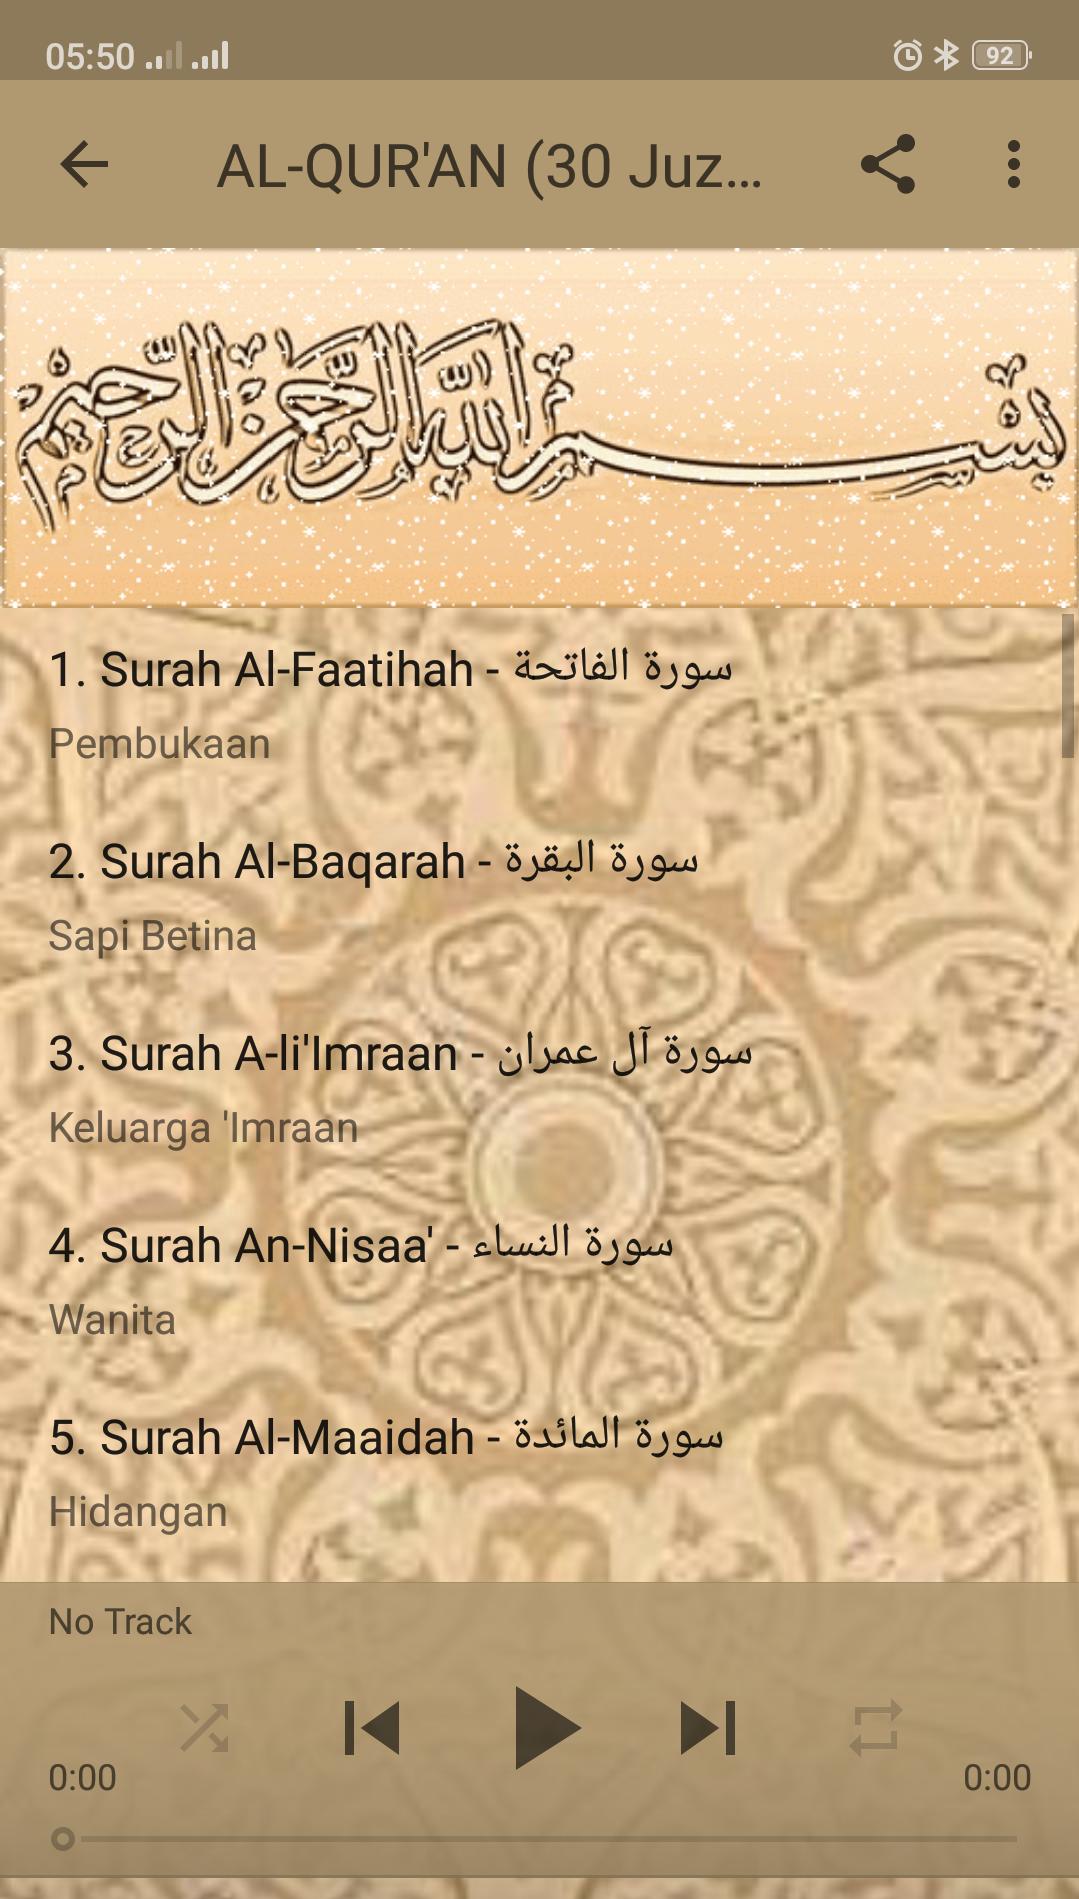 Bacaan AL-QURAN (Full 30 JUZ) - MP3 for Android - APK Download